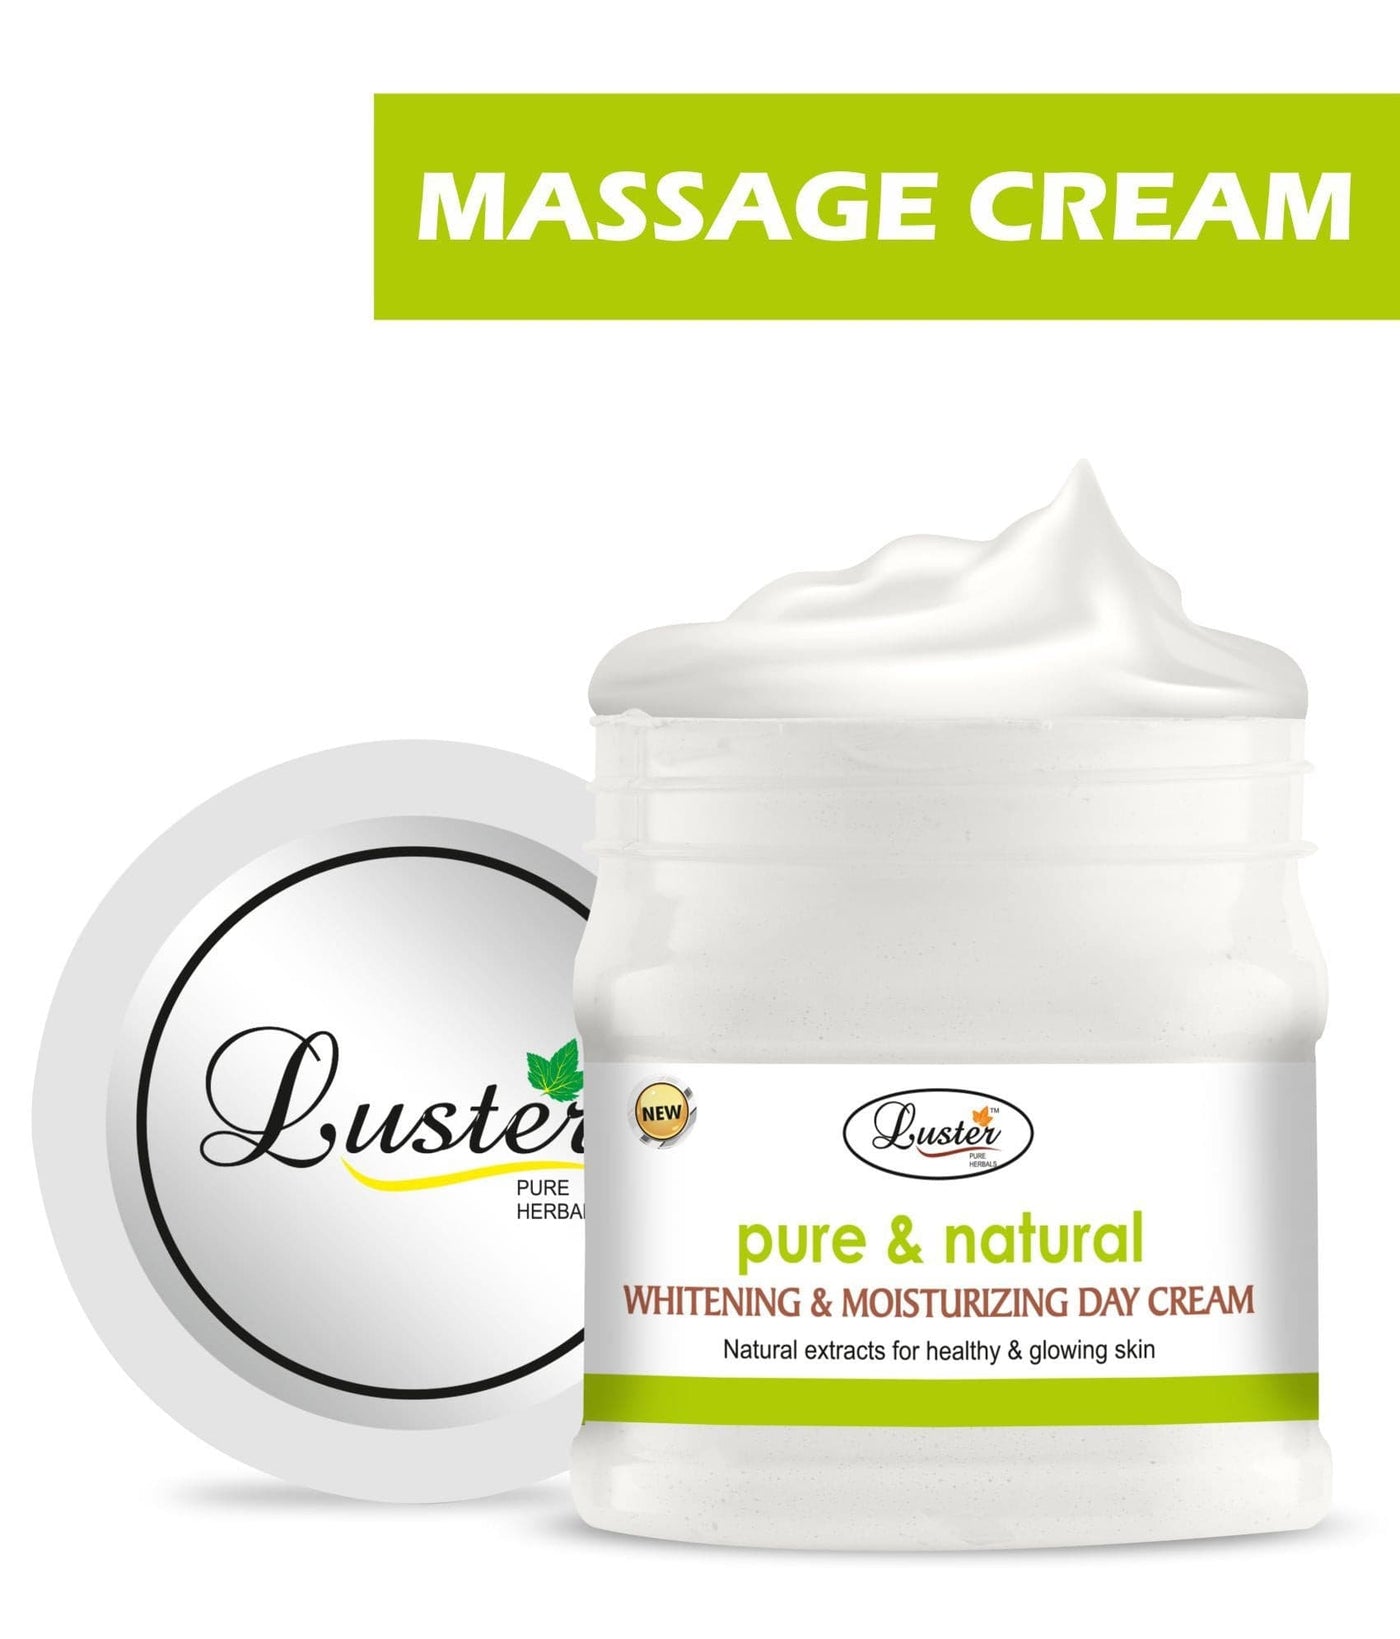 Luster Pure & Natural Whitening & Moisturizing Facial Massage Cream (Paraben & Sulfate Free)-500ml.